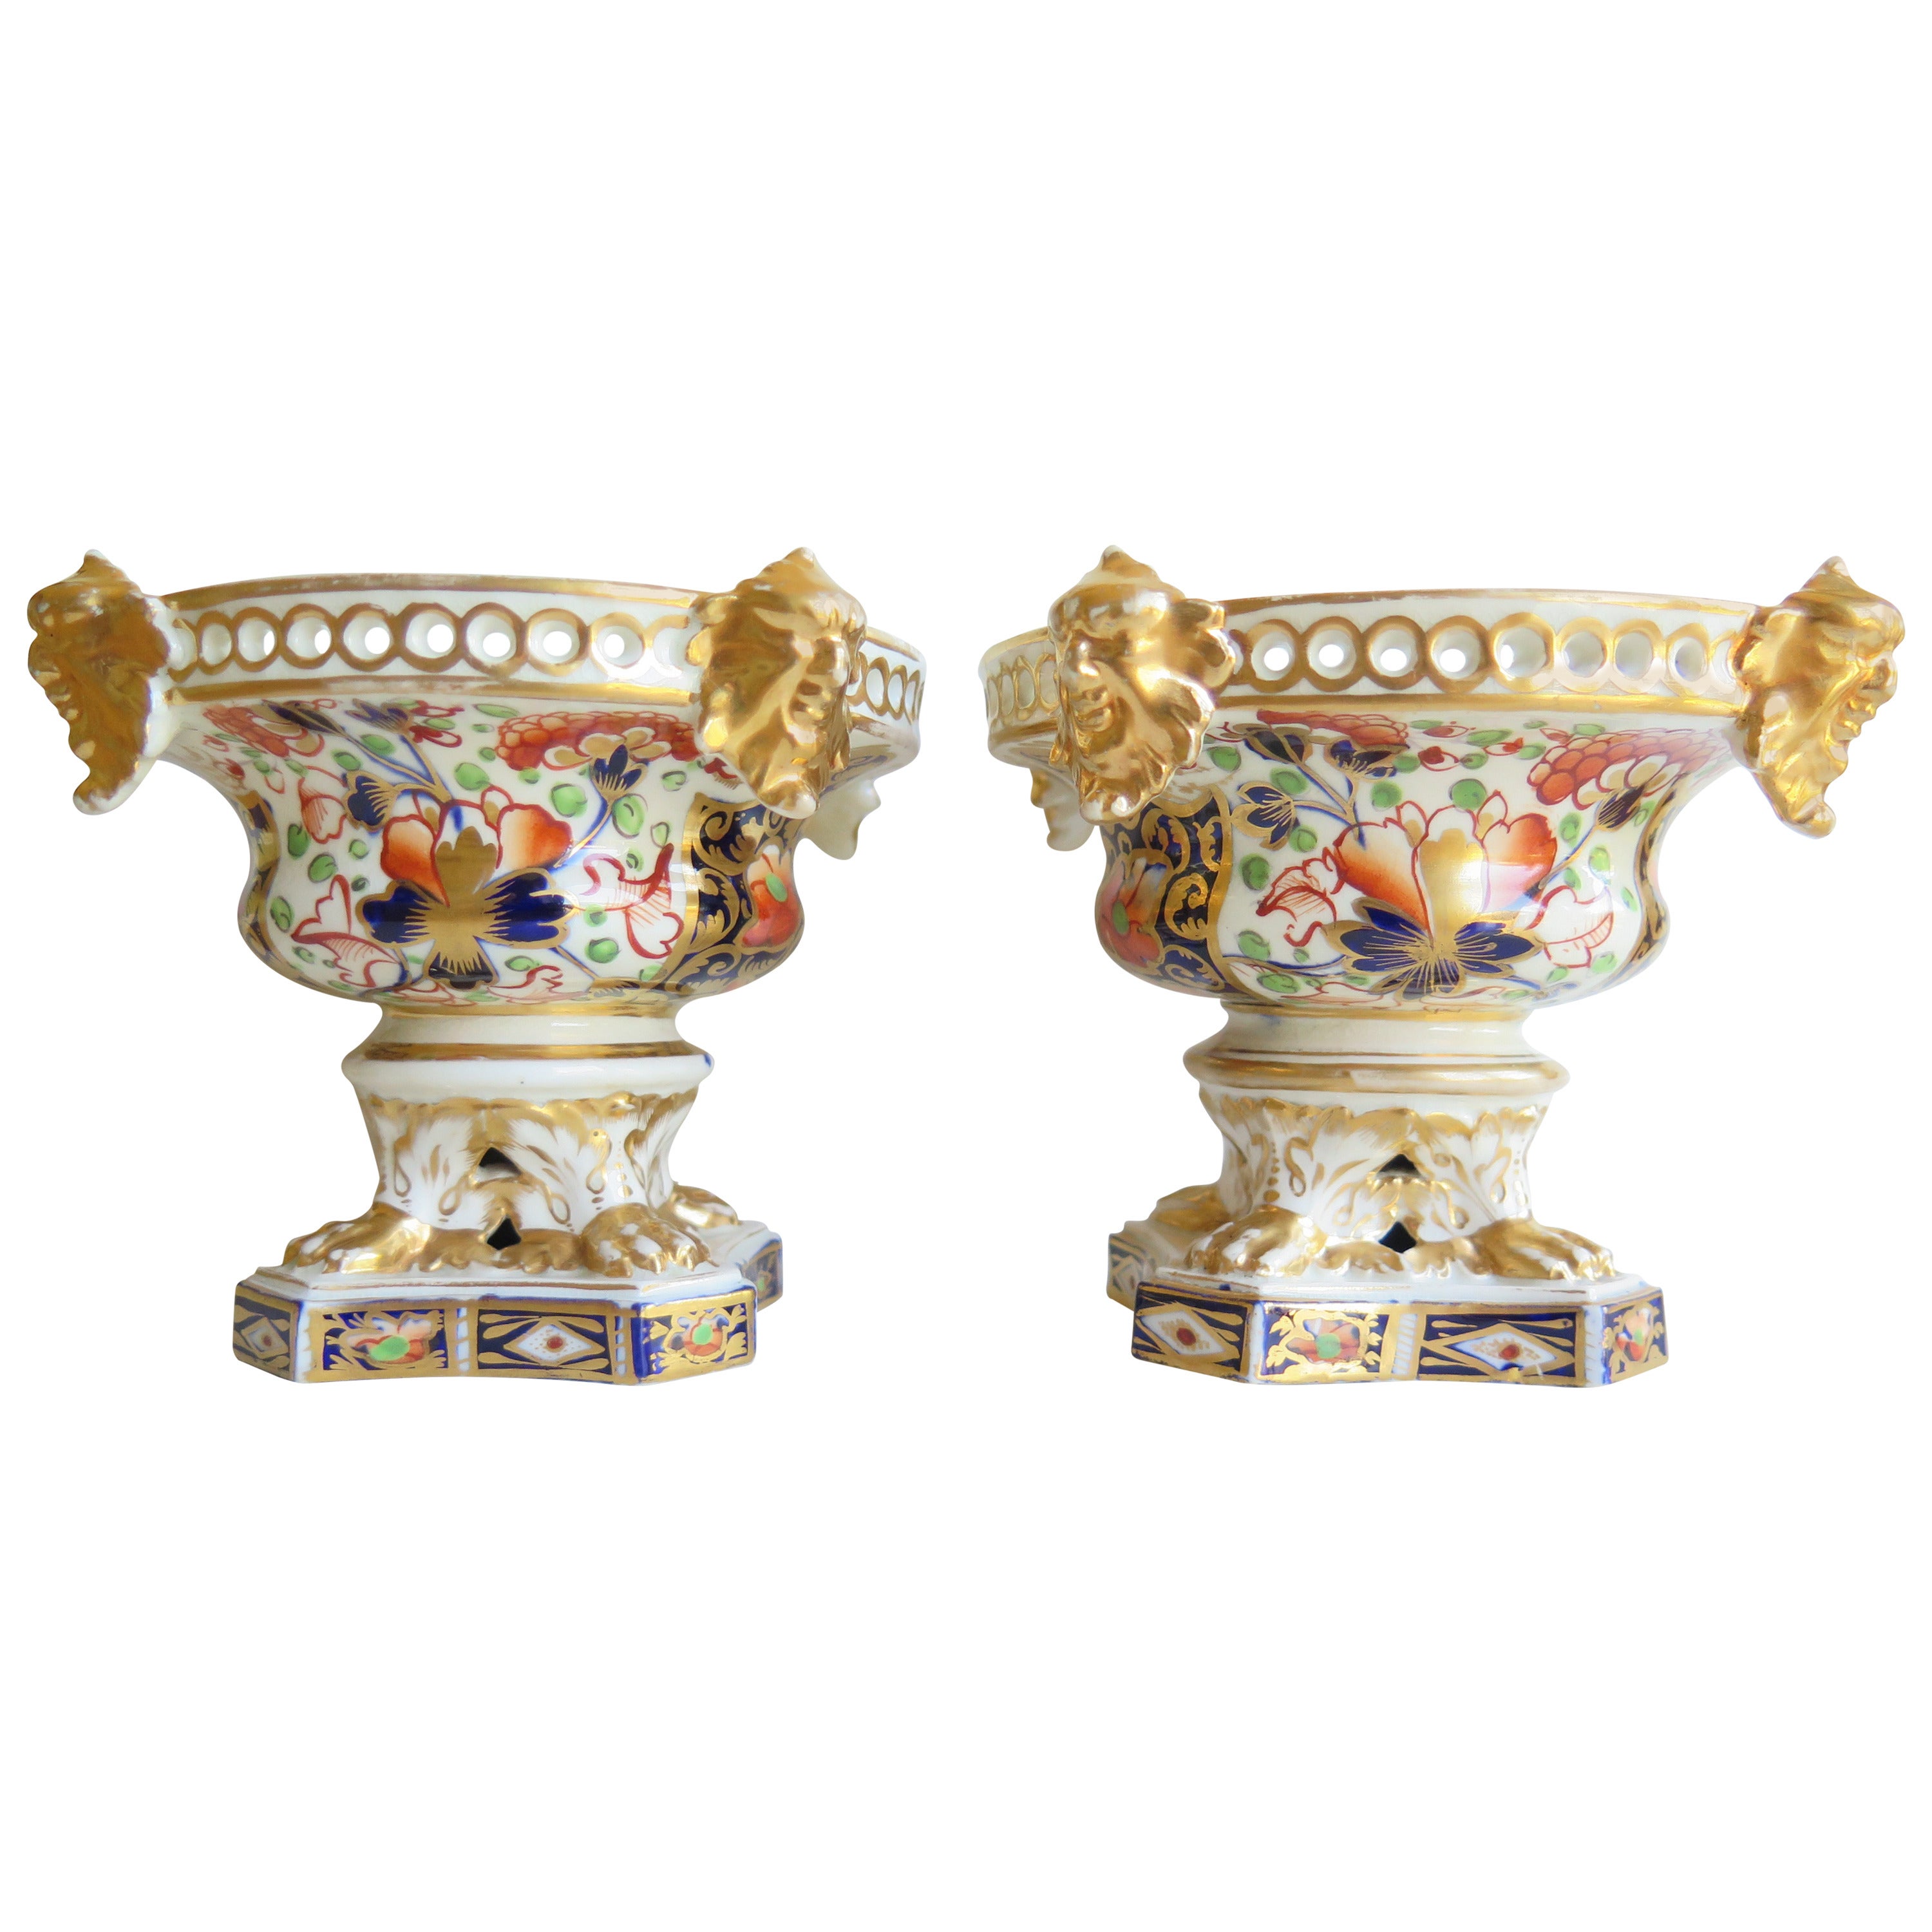 Rare, Pair of Derby Porcelain Pot-Pourri Urns, Imari Witches Pattern, circa 1815